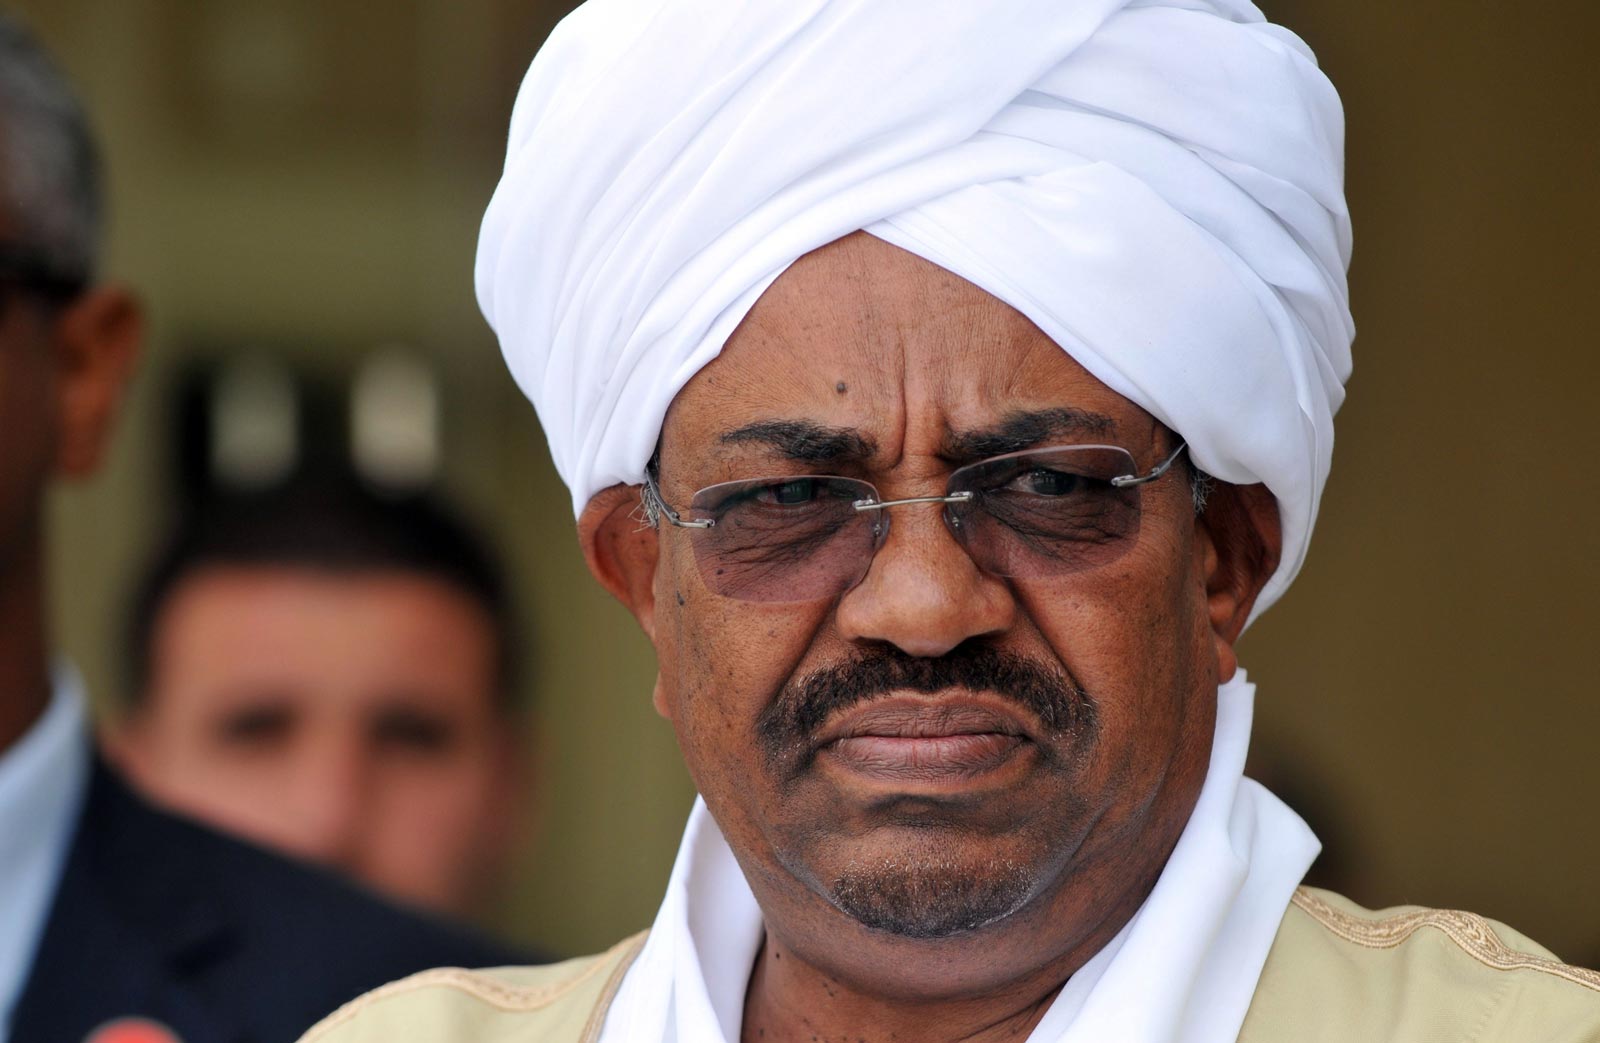 FILE PHOTO: Sudanese President Omar al-Bashir delivers a speech inside Parliament in Khartoum, Sudan April 1, 2019. REUTERS/Mohamed Nureldin Abdallah/